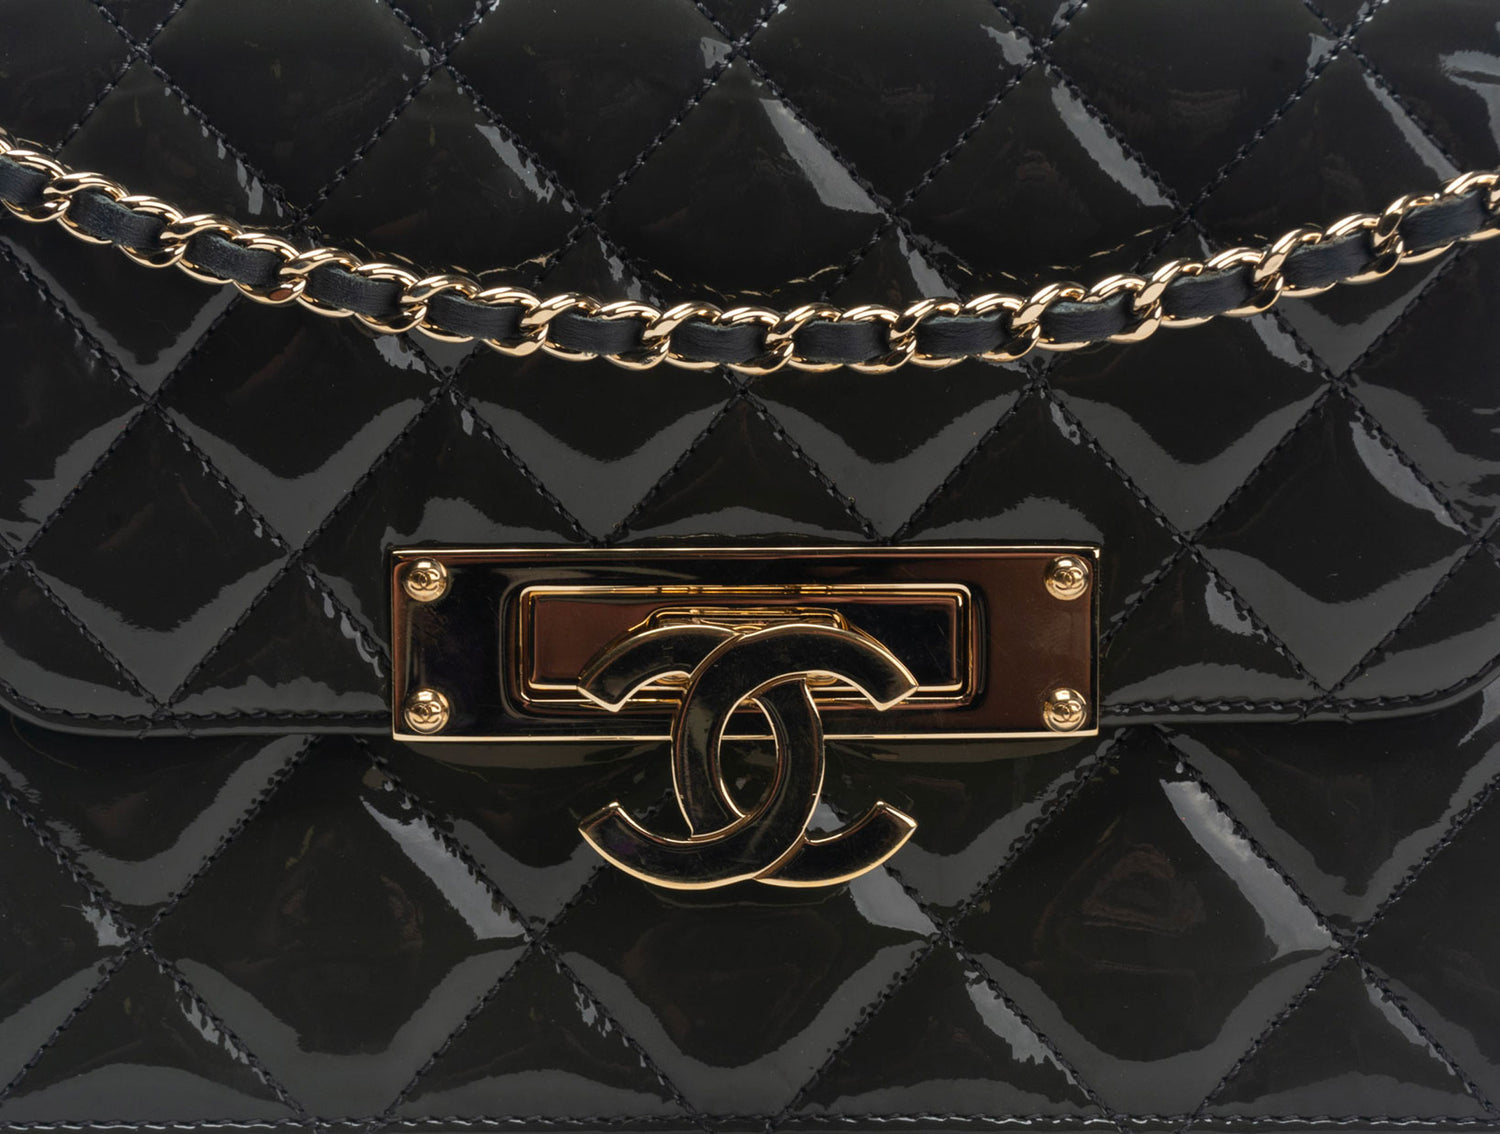 Chanel Golden Class Clasp Detail